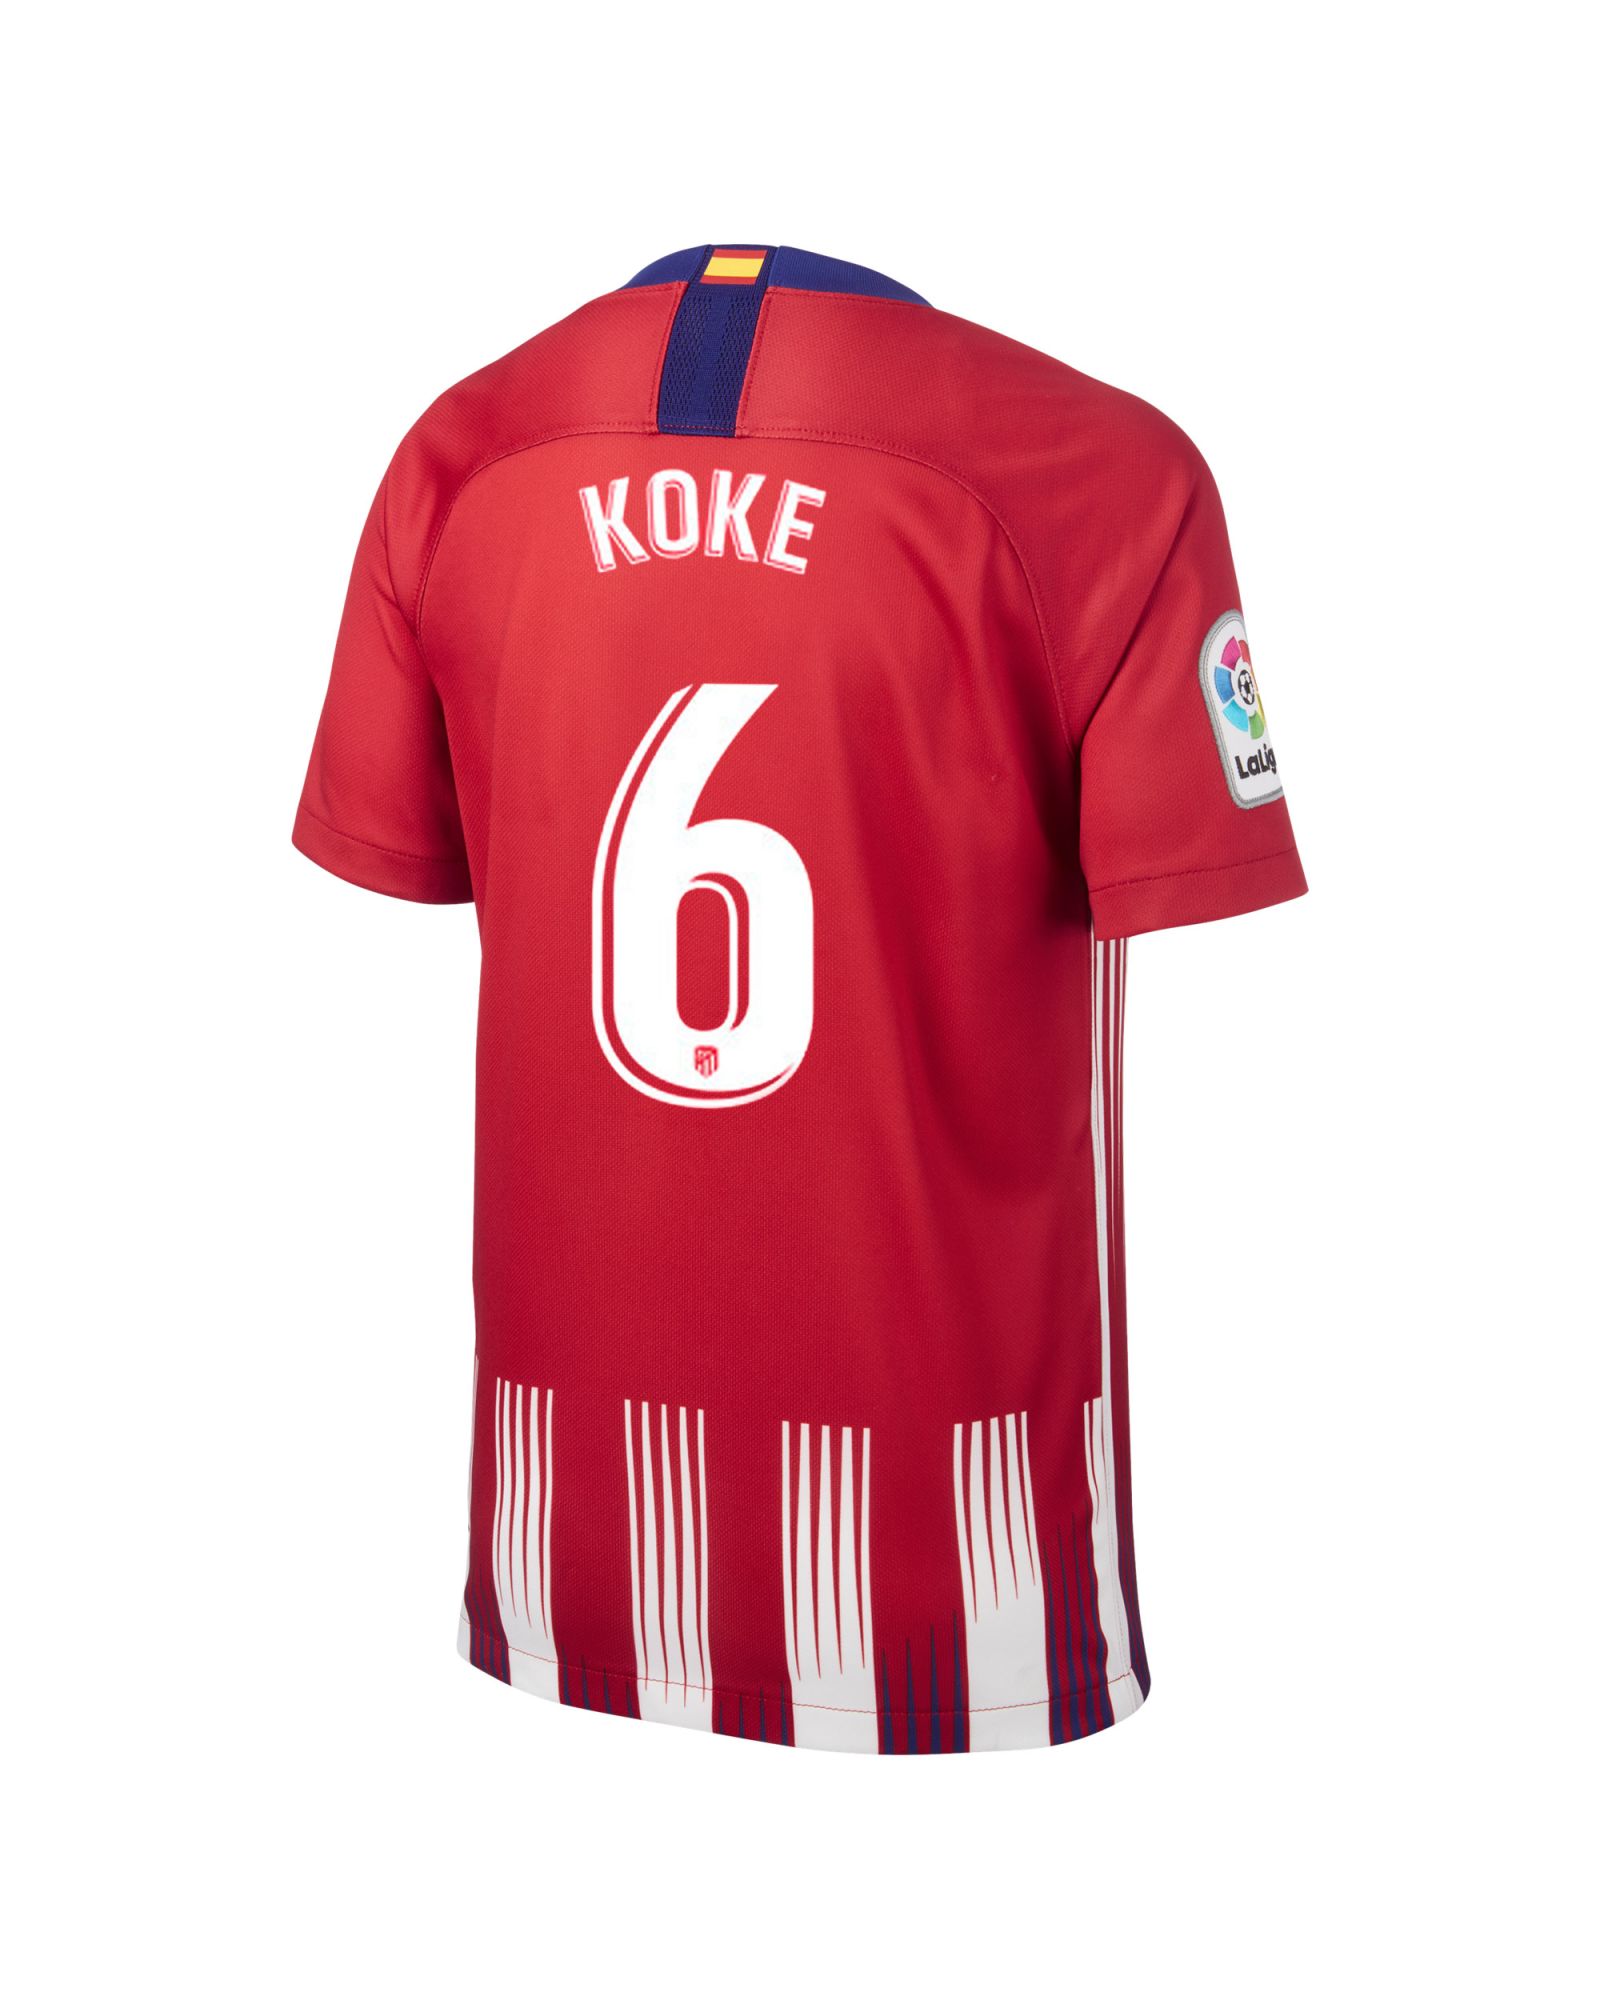 Camiseta 1ª Atlético de Madrid 2018/2019 Stadium Junior Koke - Fútbol Factory